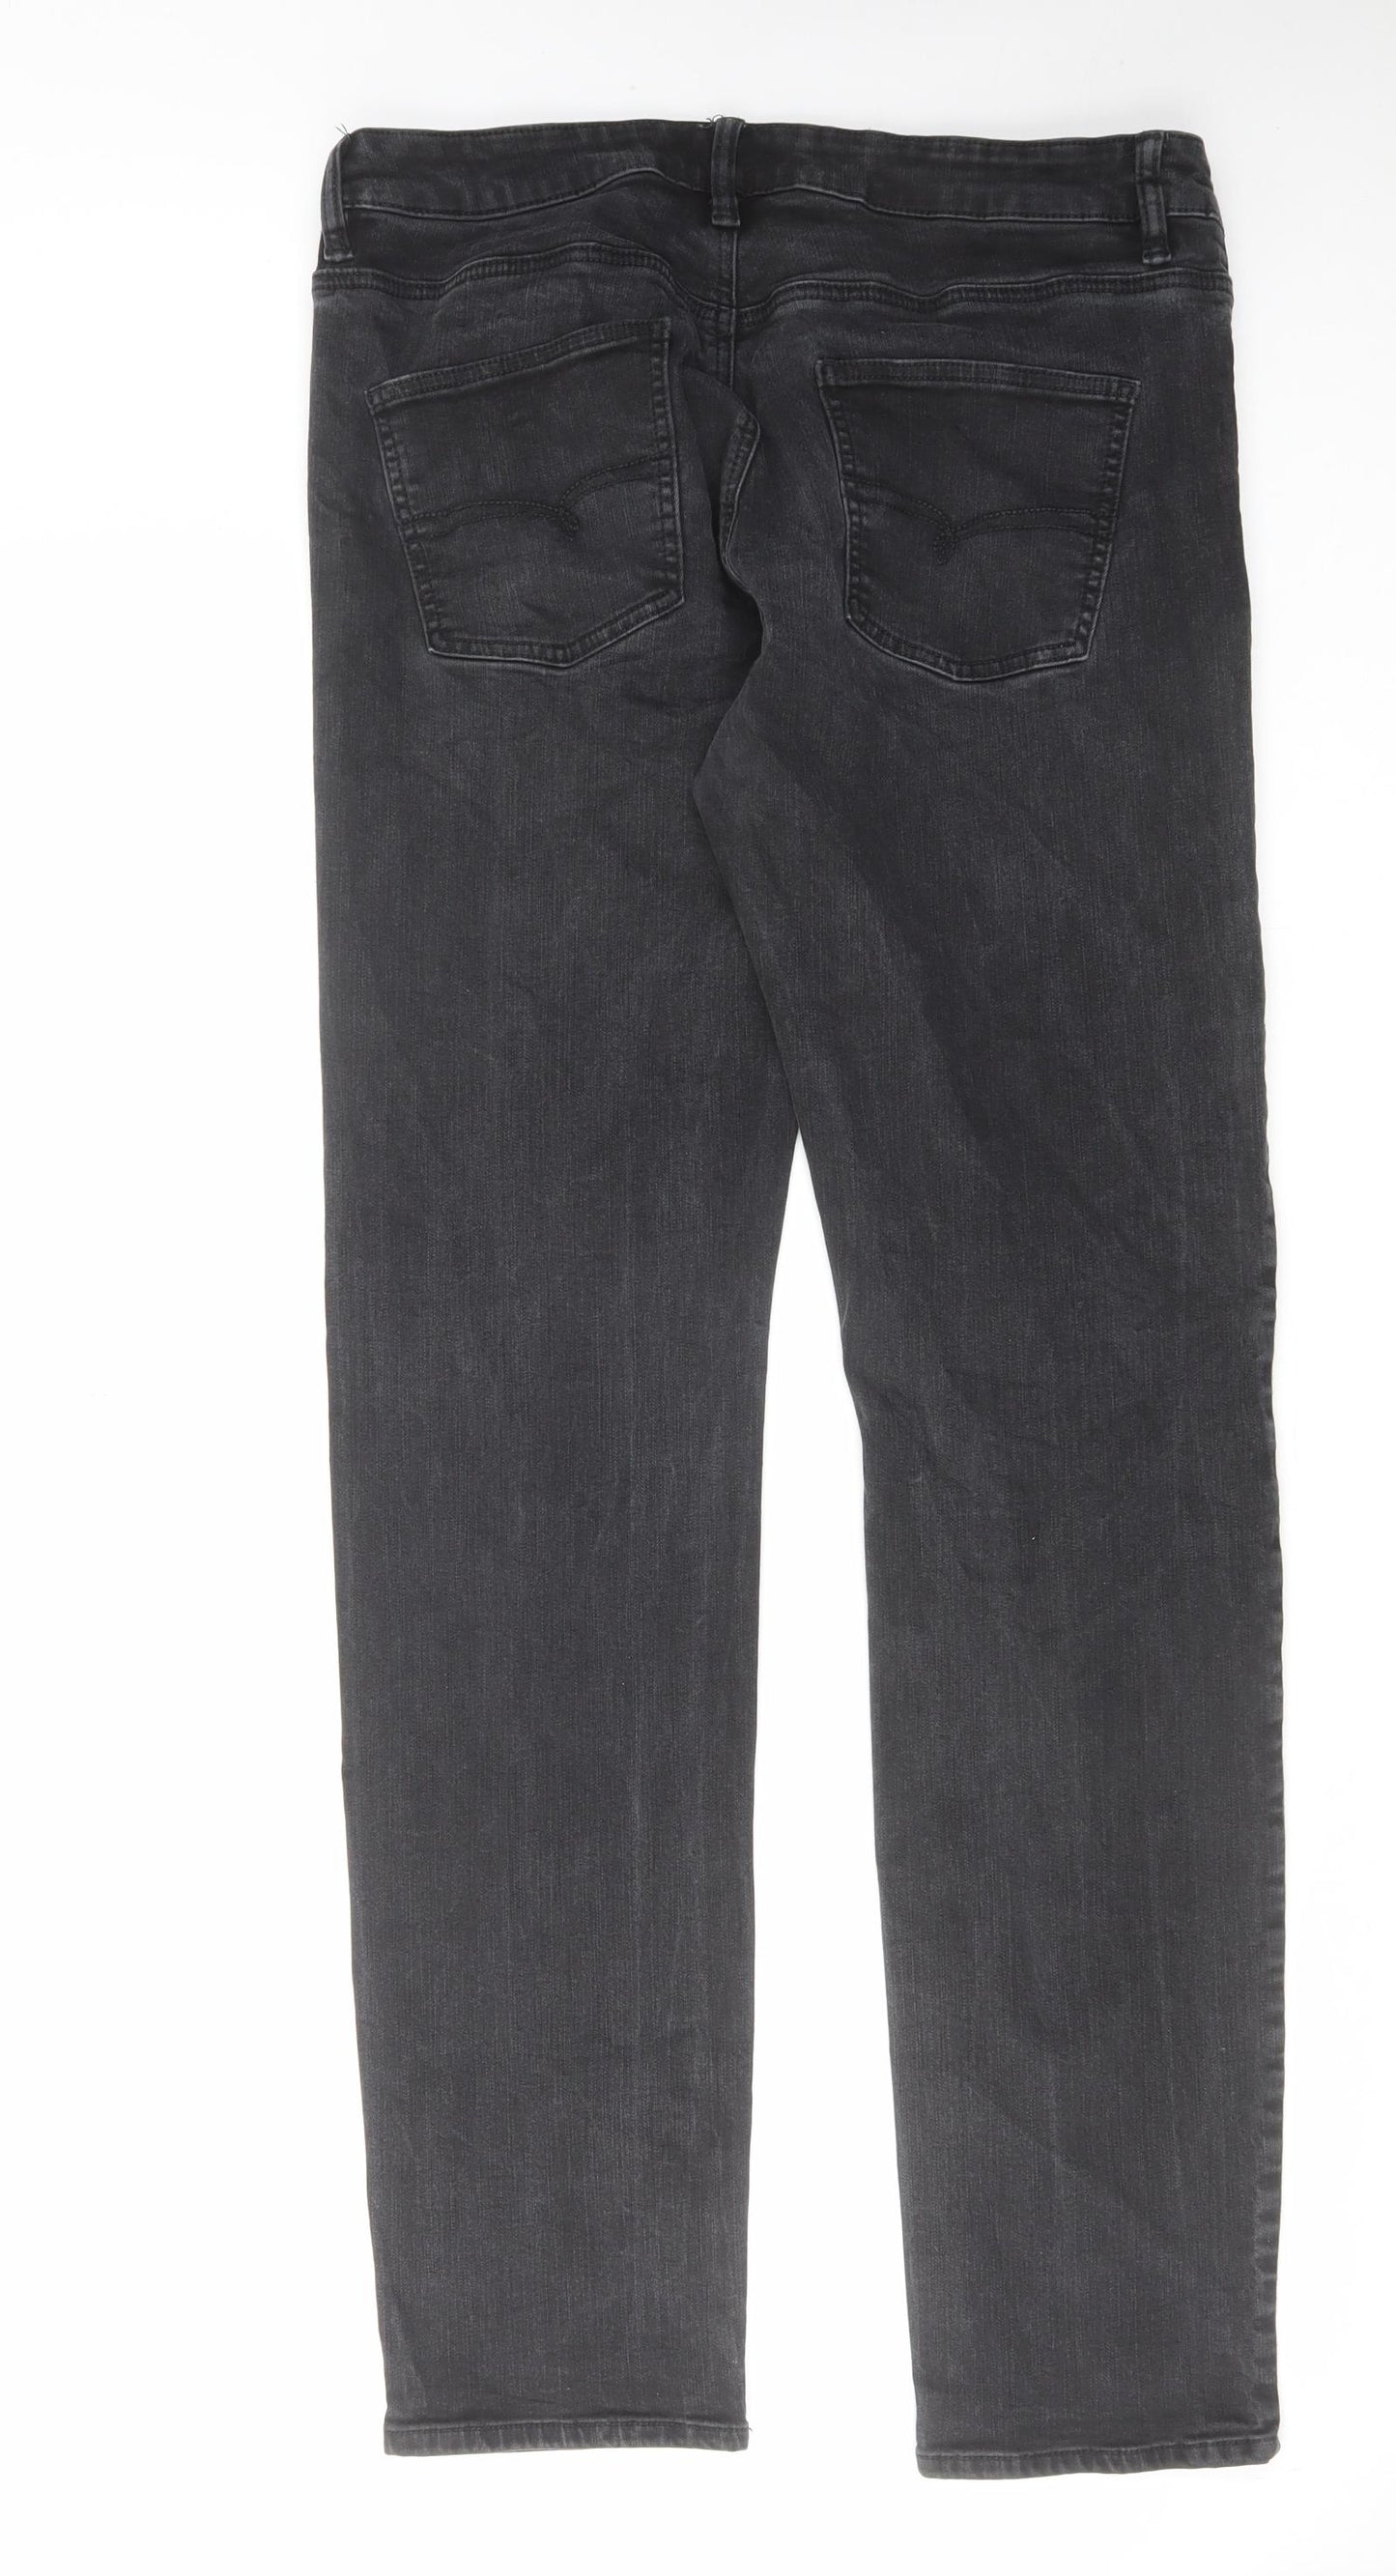 NEXT Mens Black Cotton Straight Jeans Size 36 in L35 in Slim Zip